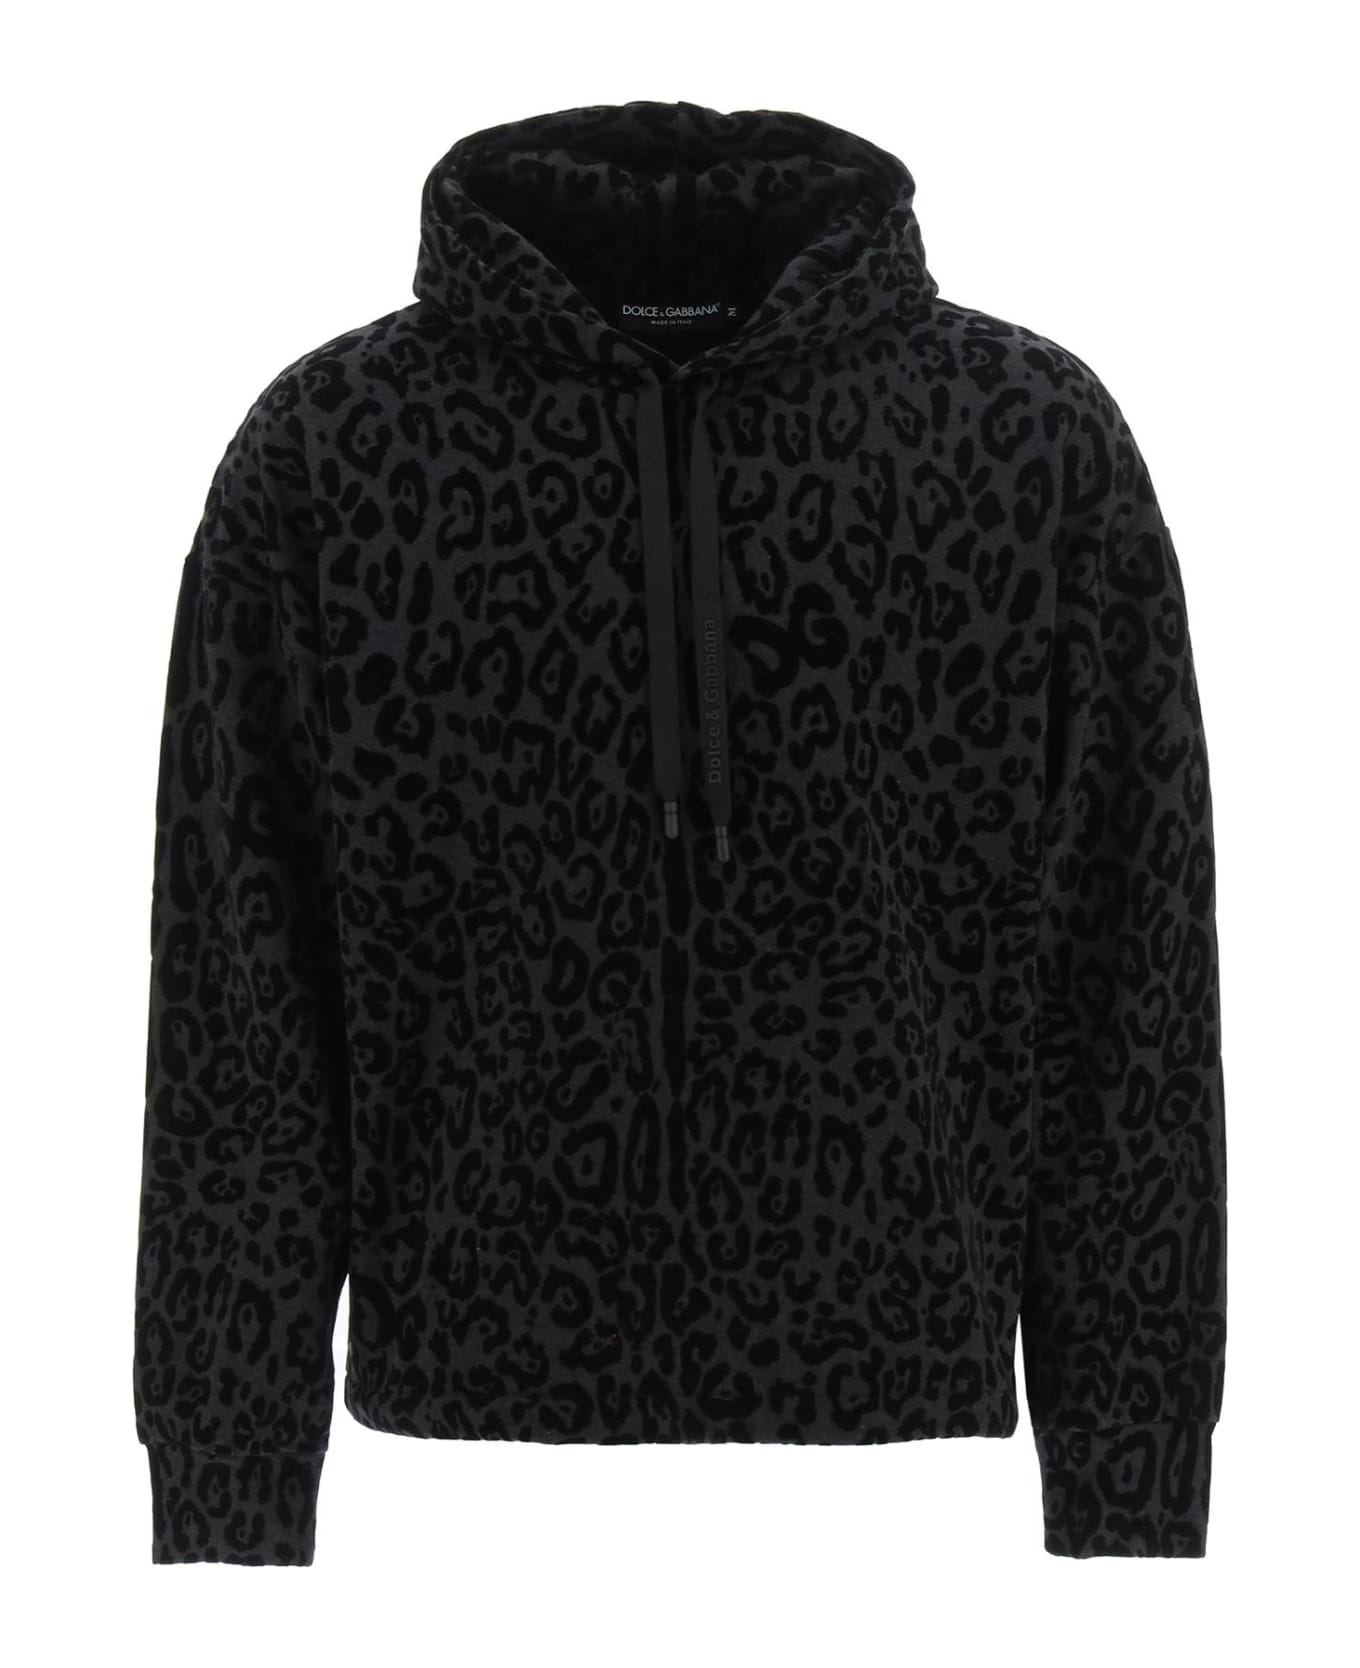 Dolce & Gabbana Flocked Leopard Hoodie - VARIANTE ABBINATA (Black)